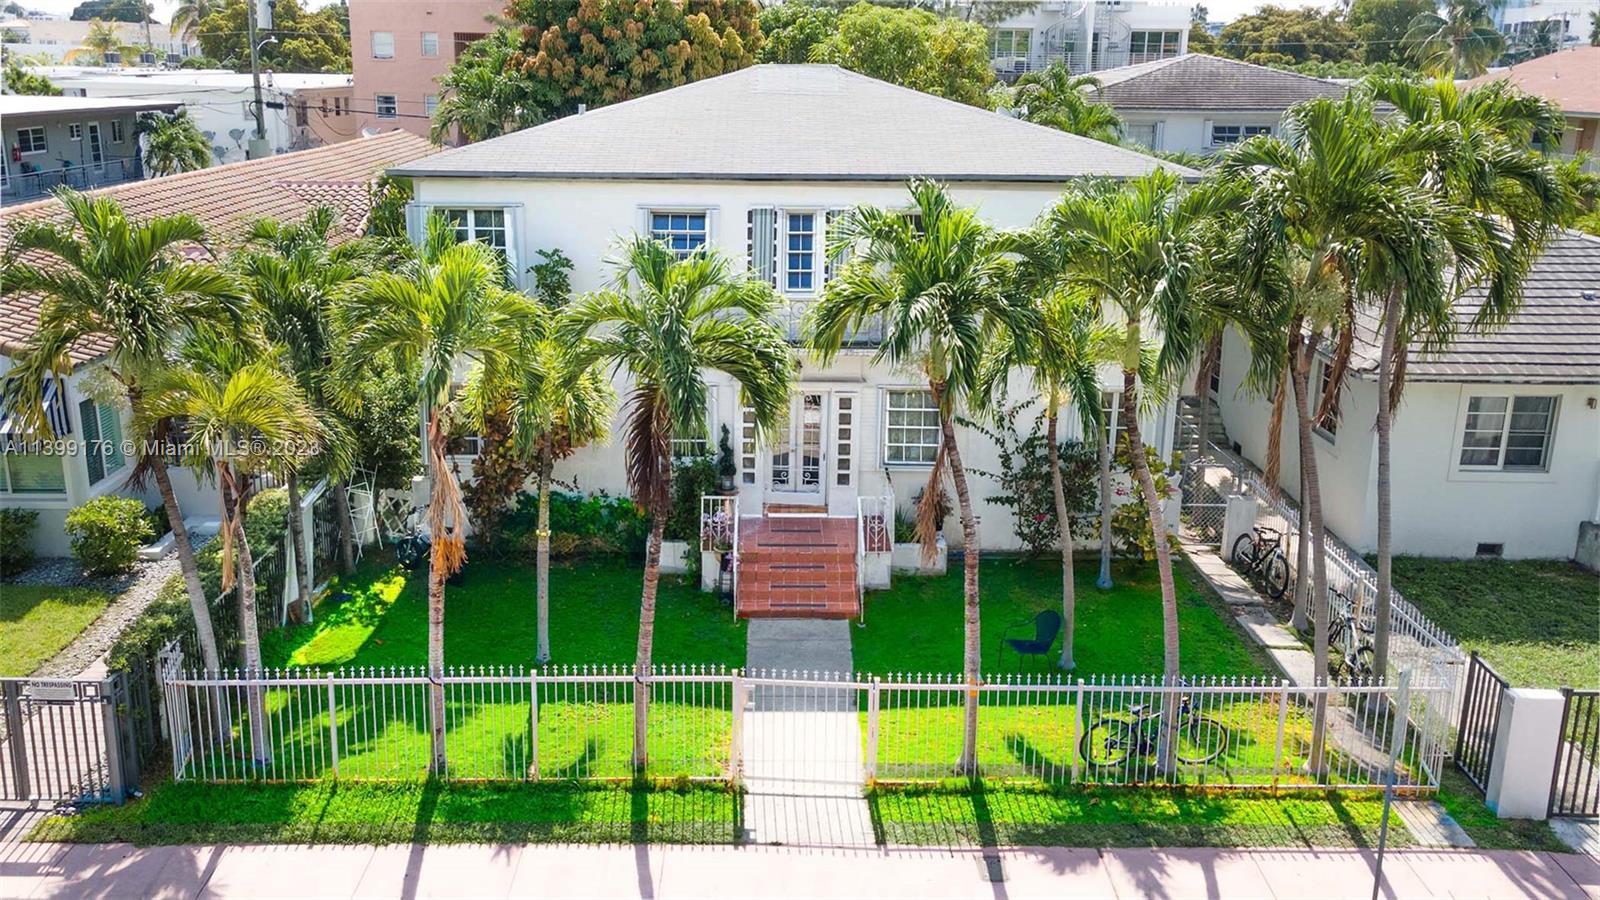 Rental Property at 635 Lenox Ave, Miami Beach, Miami-Dade County, Florida -  - $1,980,000 MO.